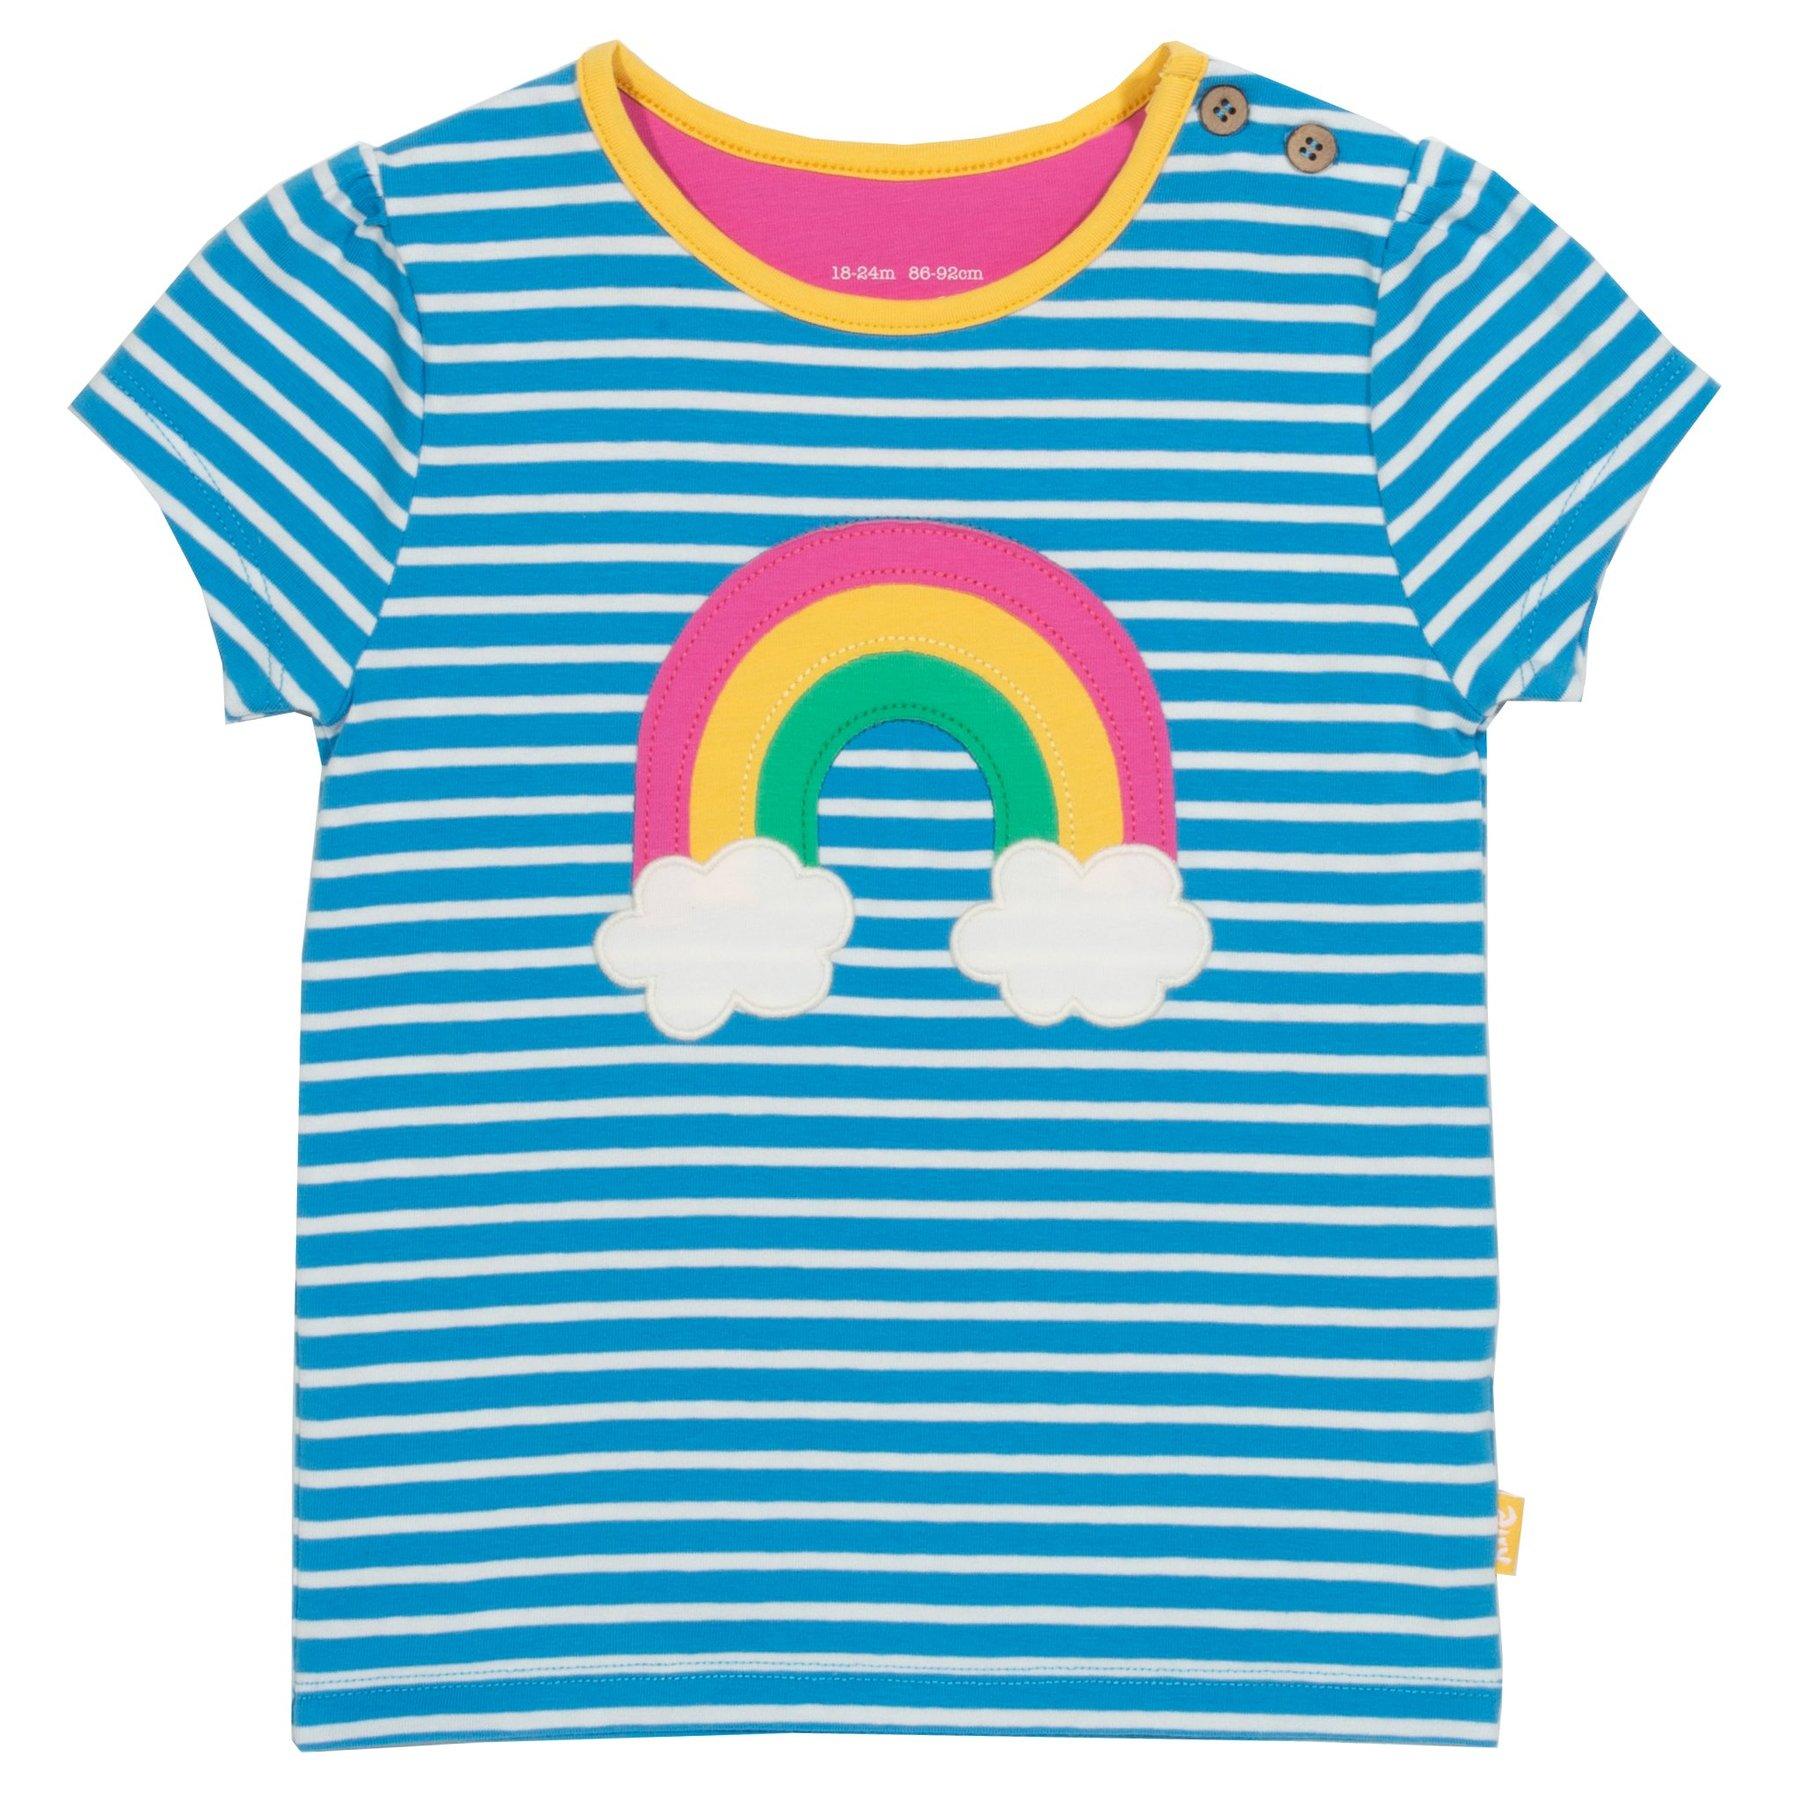 Kite Clothing Rainbow T-Shirt front